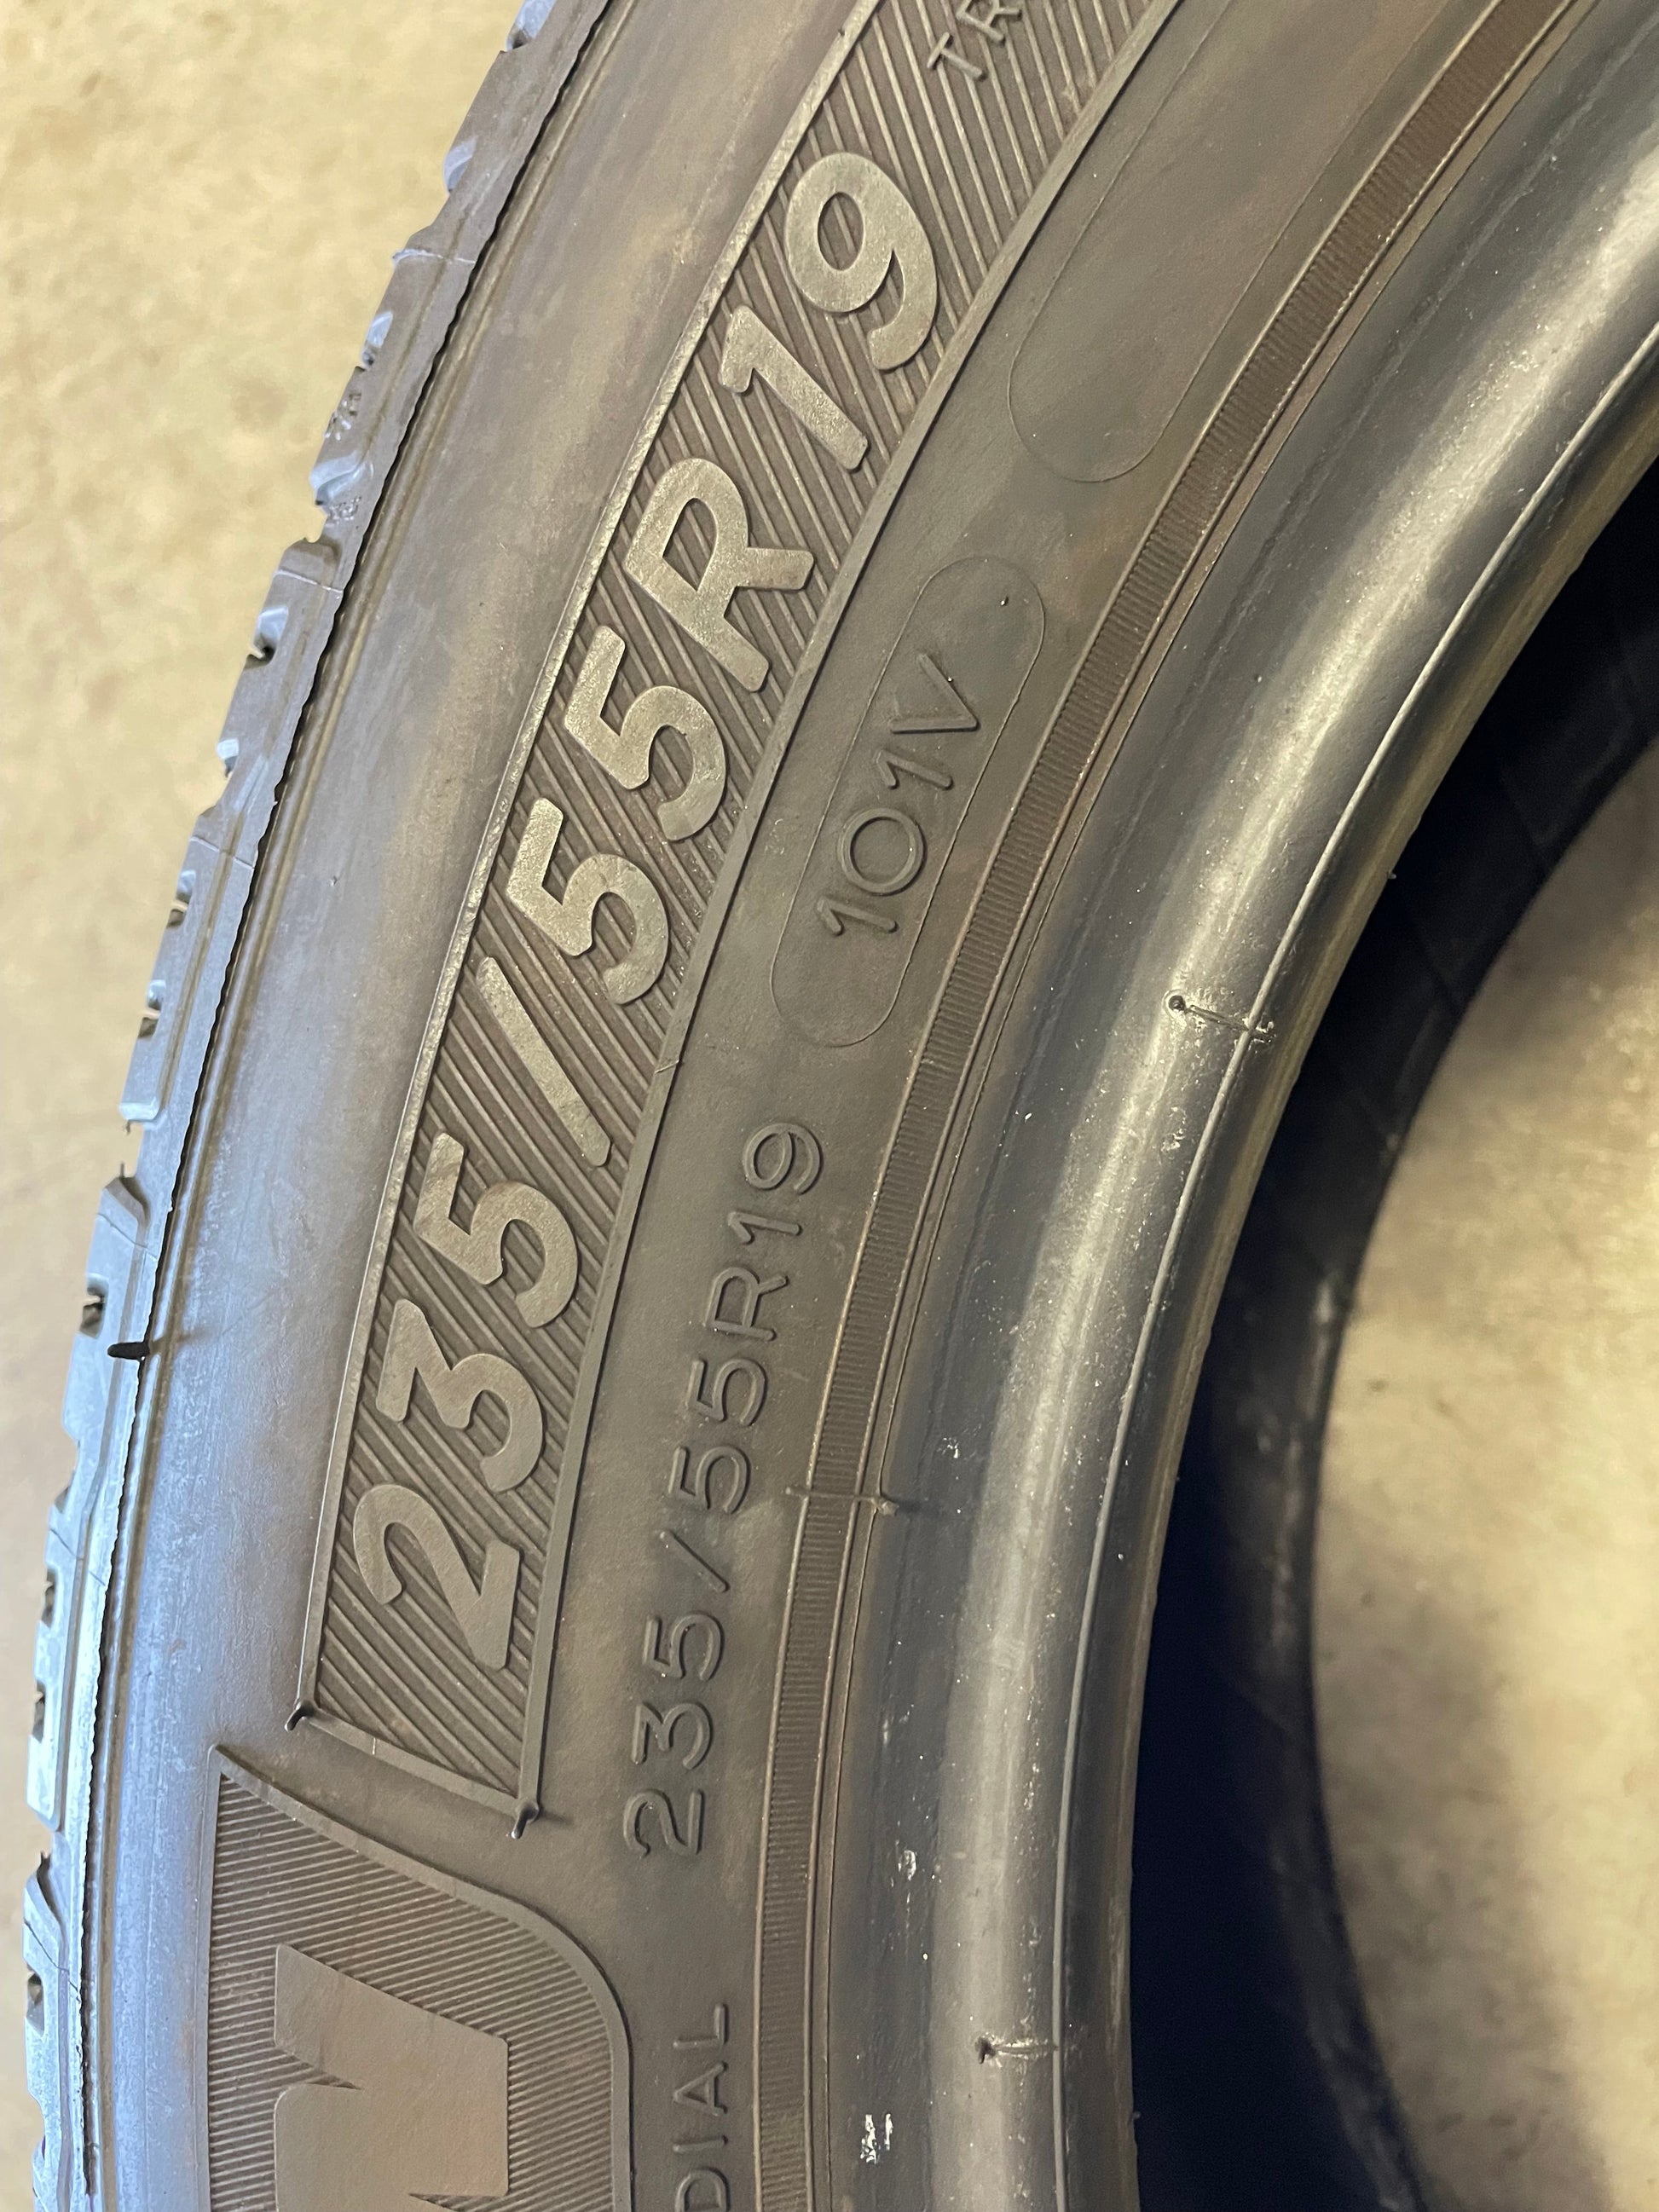 SET OF 2 235/55R19 Michelin Premier LTX 101 V SL - Premium Used Tires